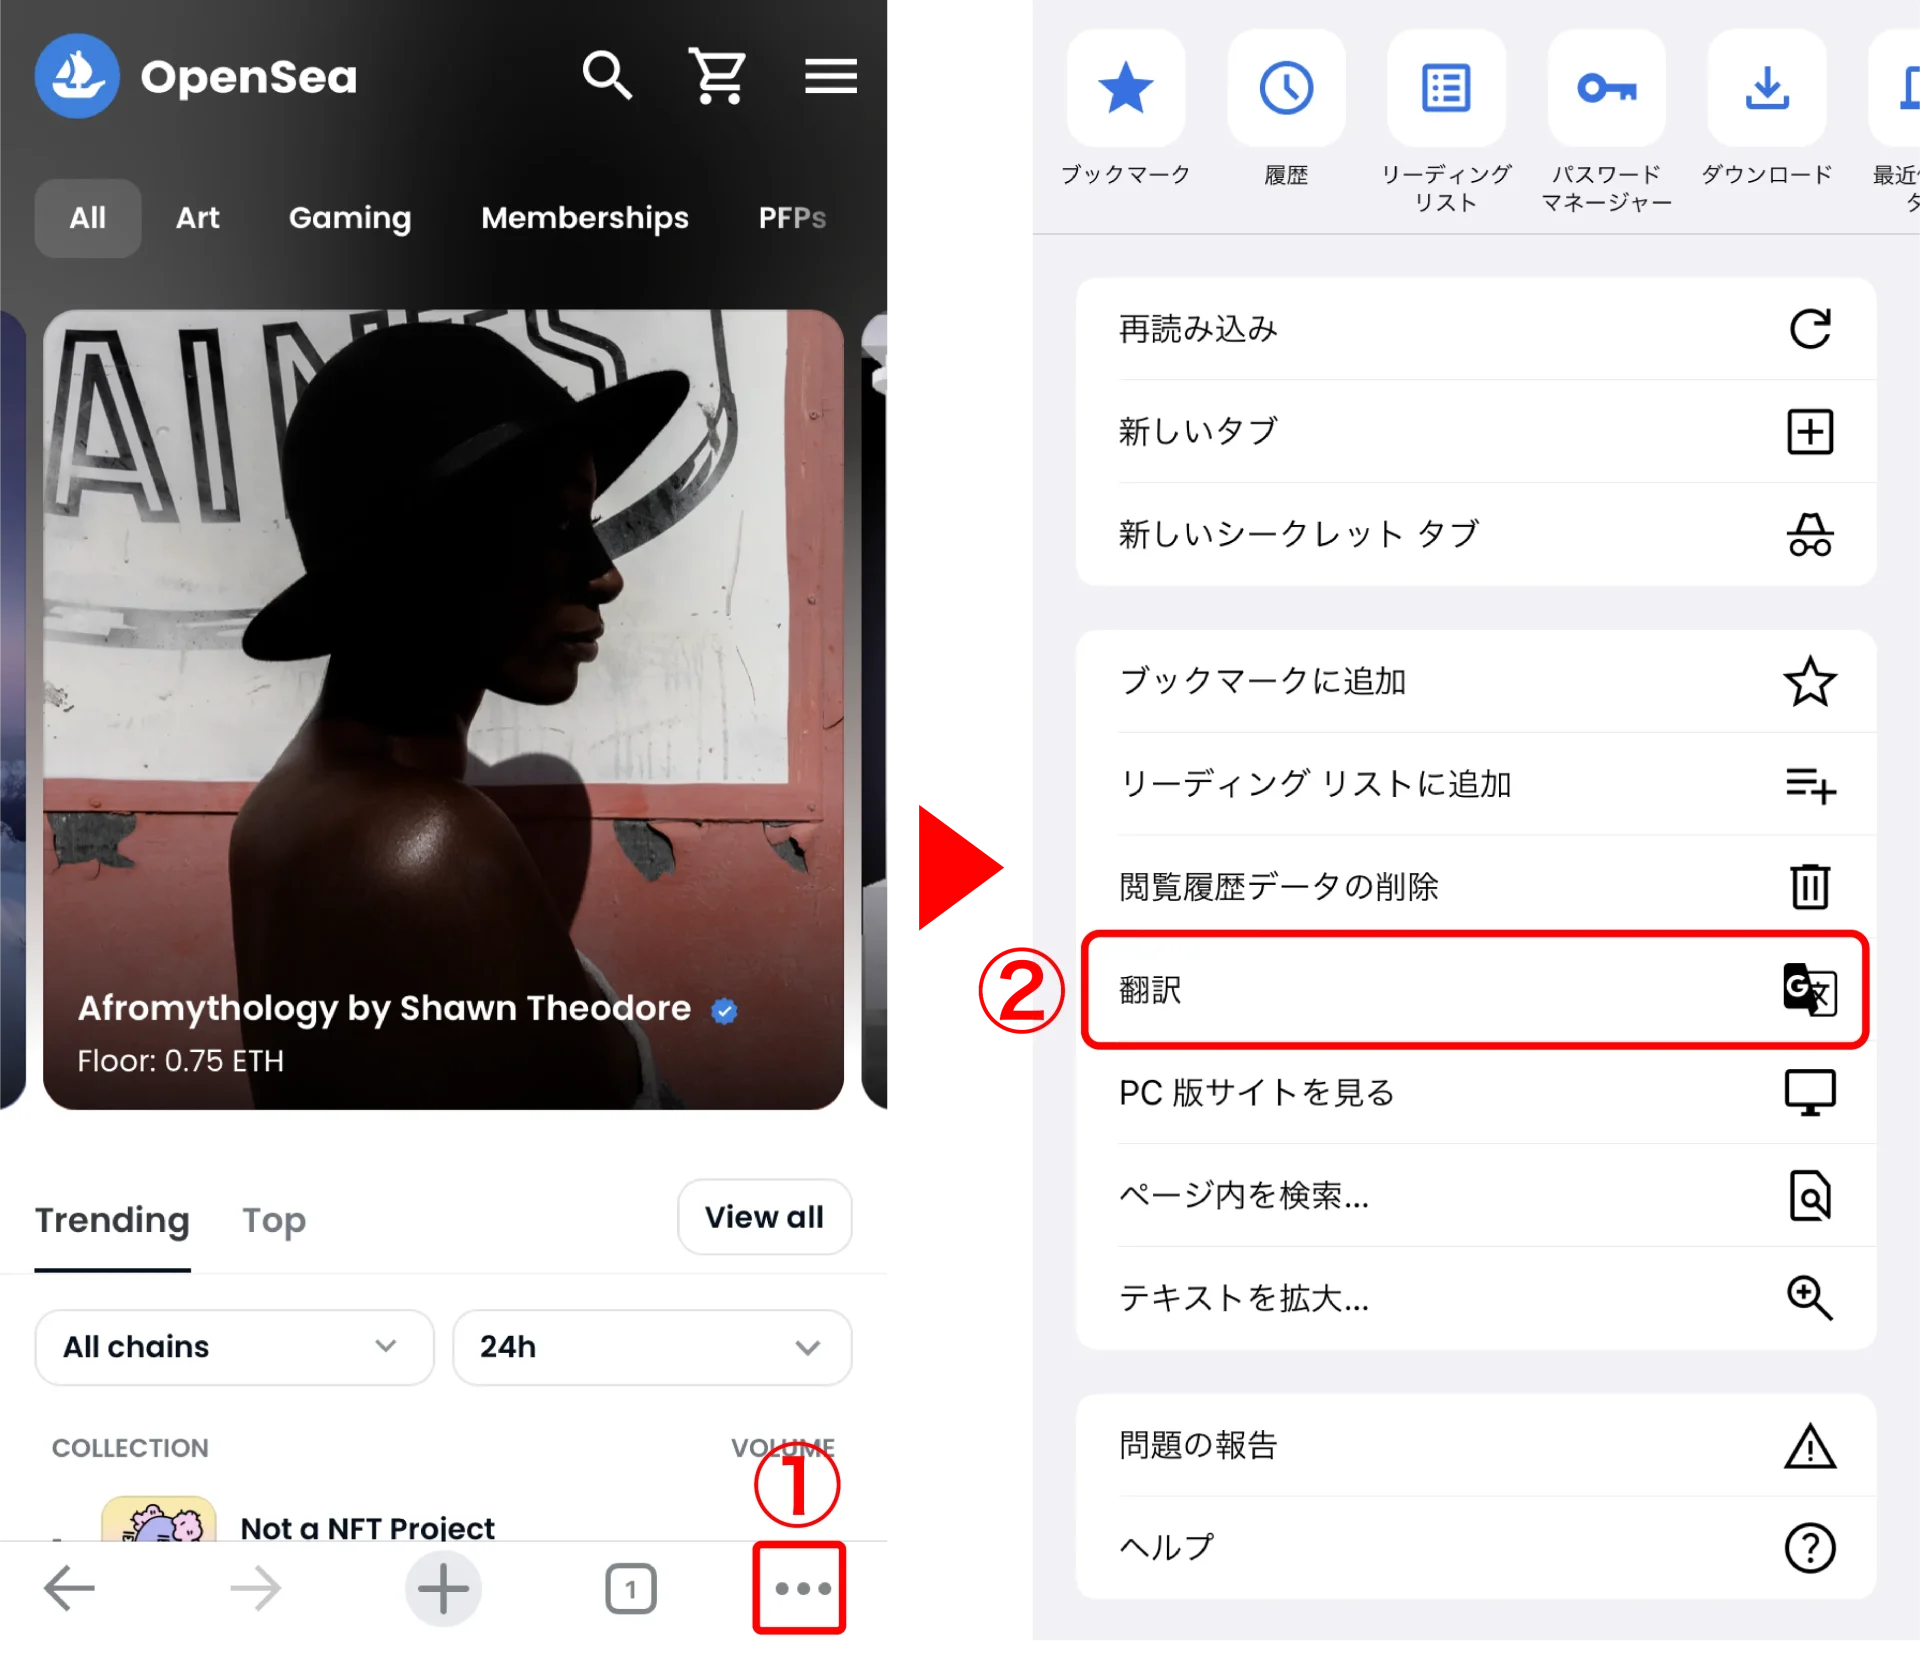 GoogleChromeの翻訳機能を使いOpenSeaを日本語化する方法(スマホ版)02